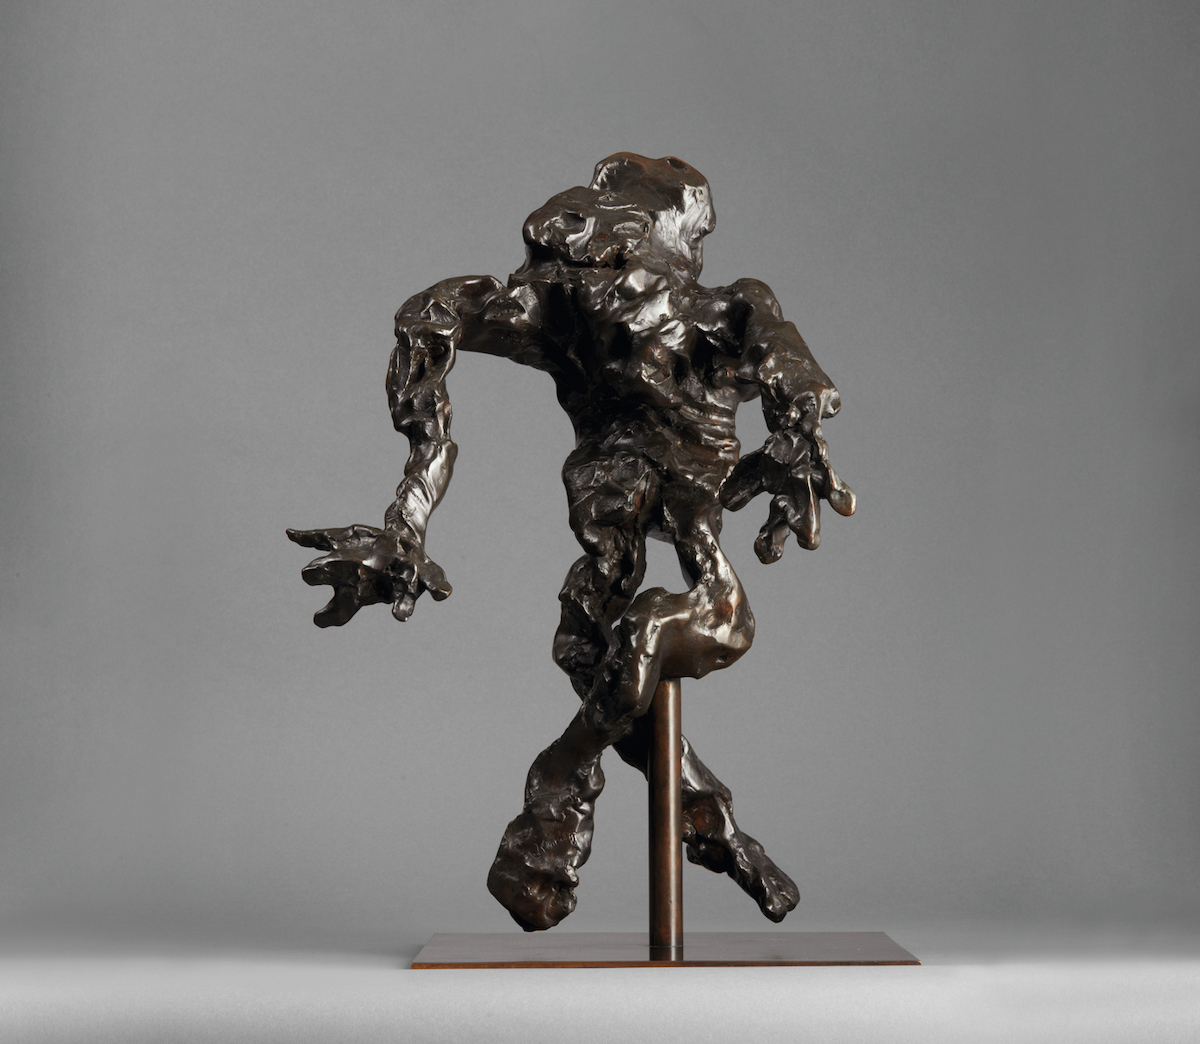 <b>Willem de Kooning, Cross-Legged-Figure, 1972, Hilti Art Foundation</b>